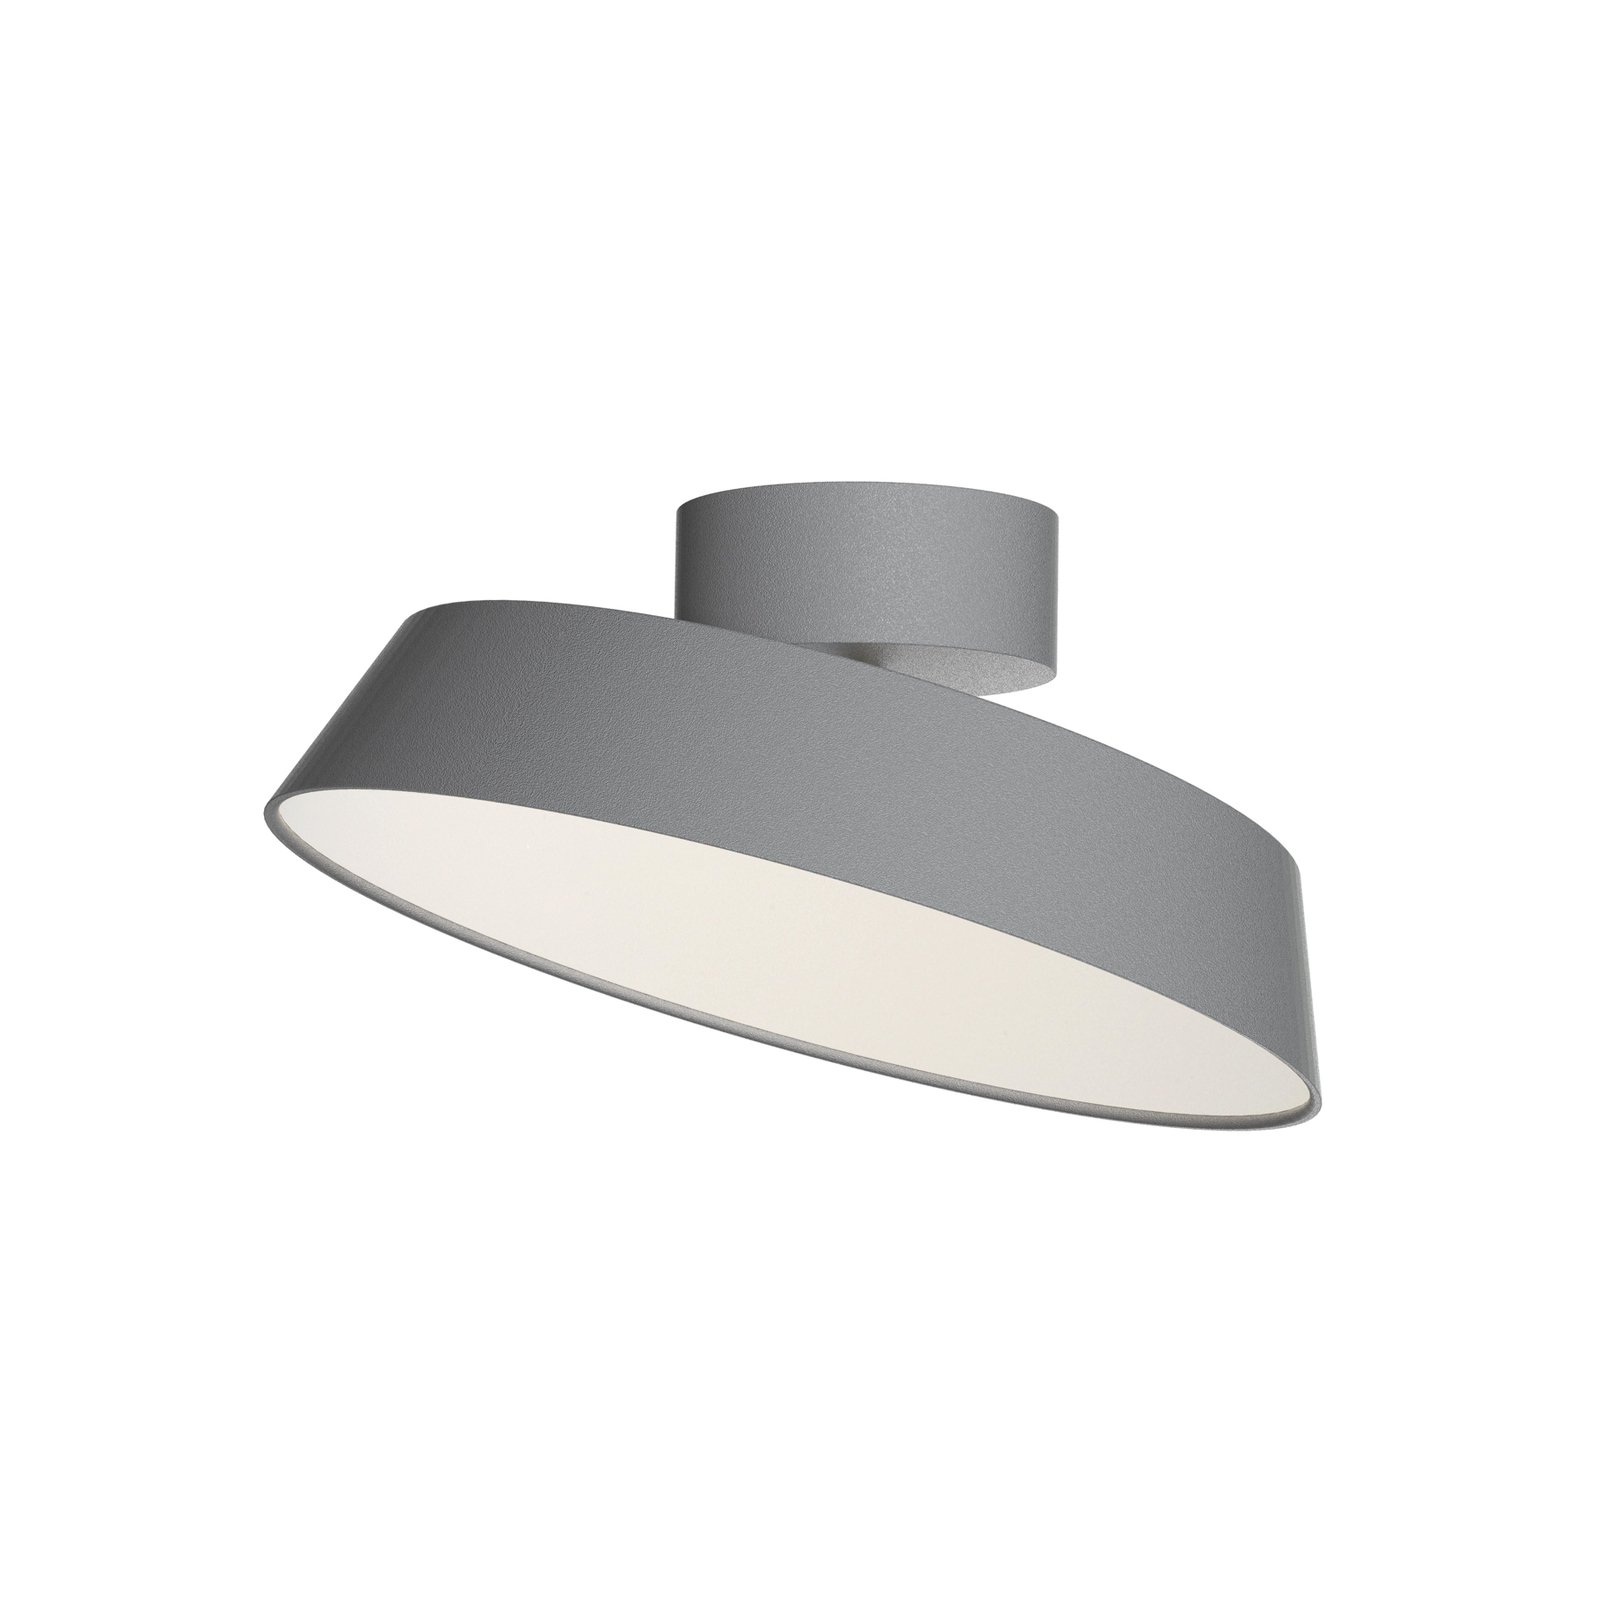 LED-taklampe Kaito 2 Dim, grå, Ø 30 cm, dimbar